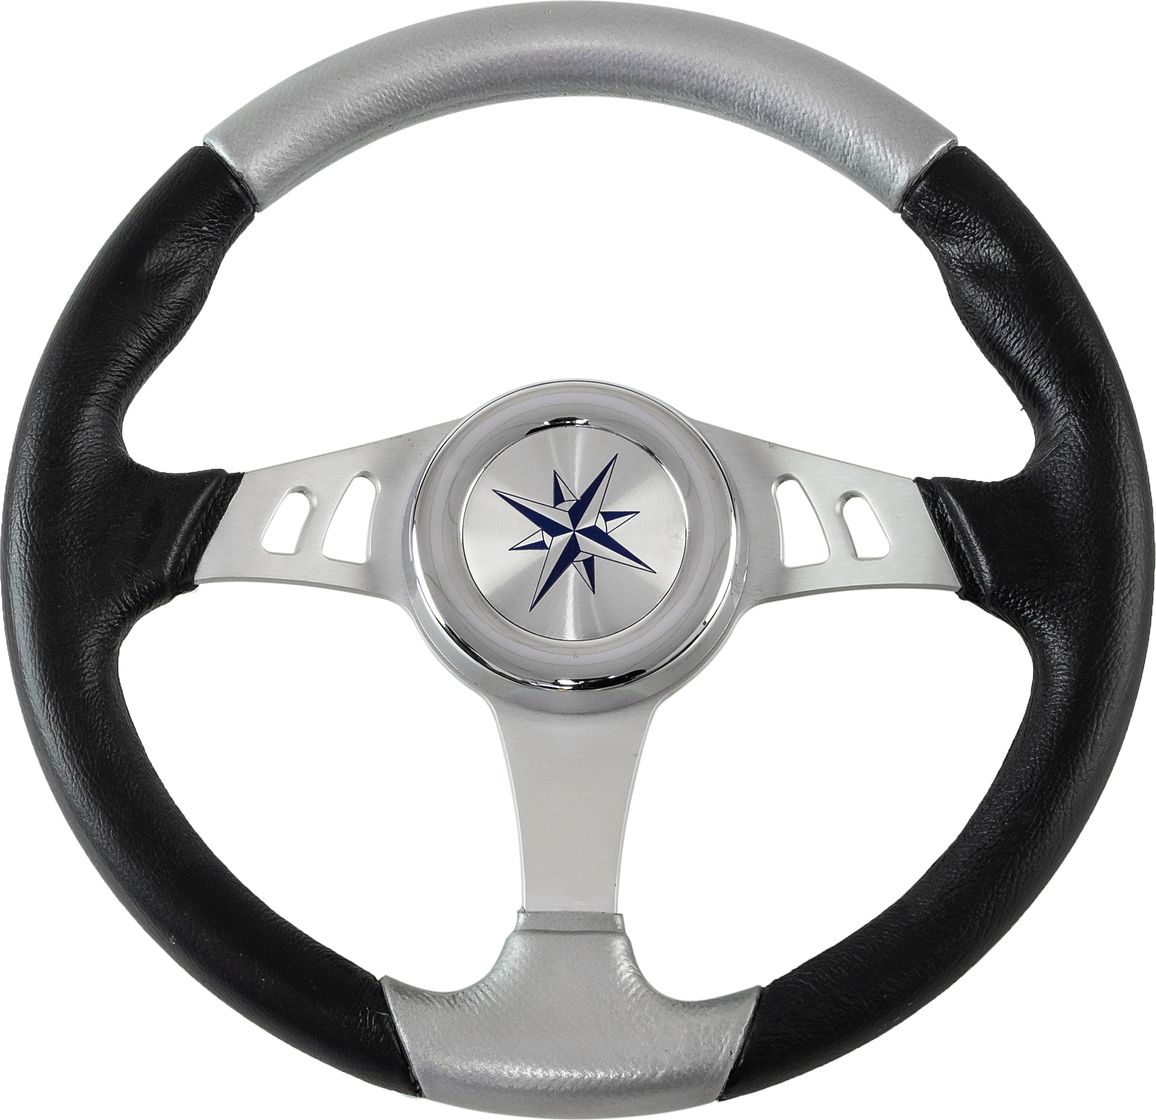 Рулевое колесо SKIPPER обод черносеребристый, спицы серебряные д. 350 мм VN835001-93 рулевое колесо manta обод спицы серебряные д 355 мм vn70551 01